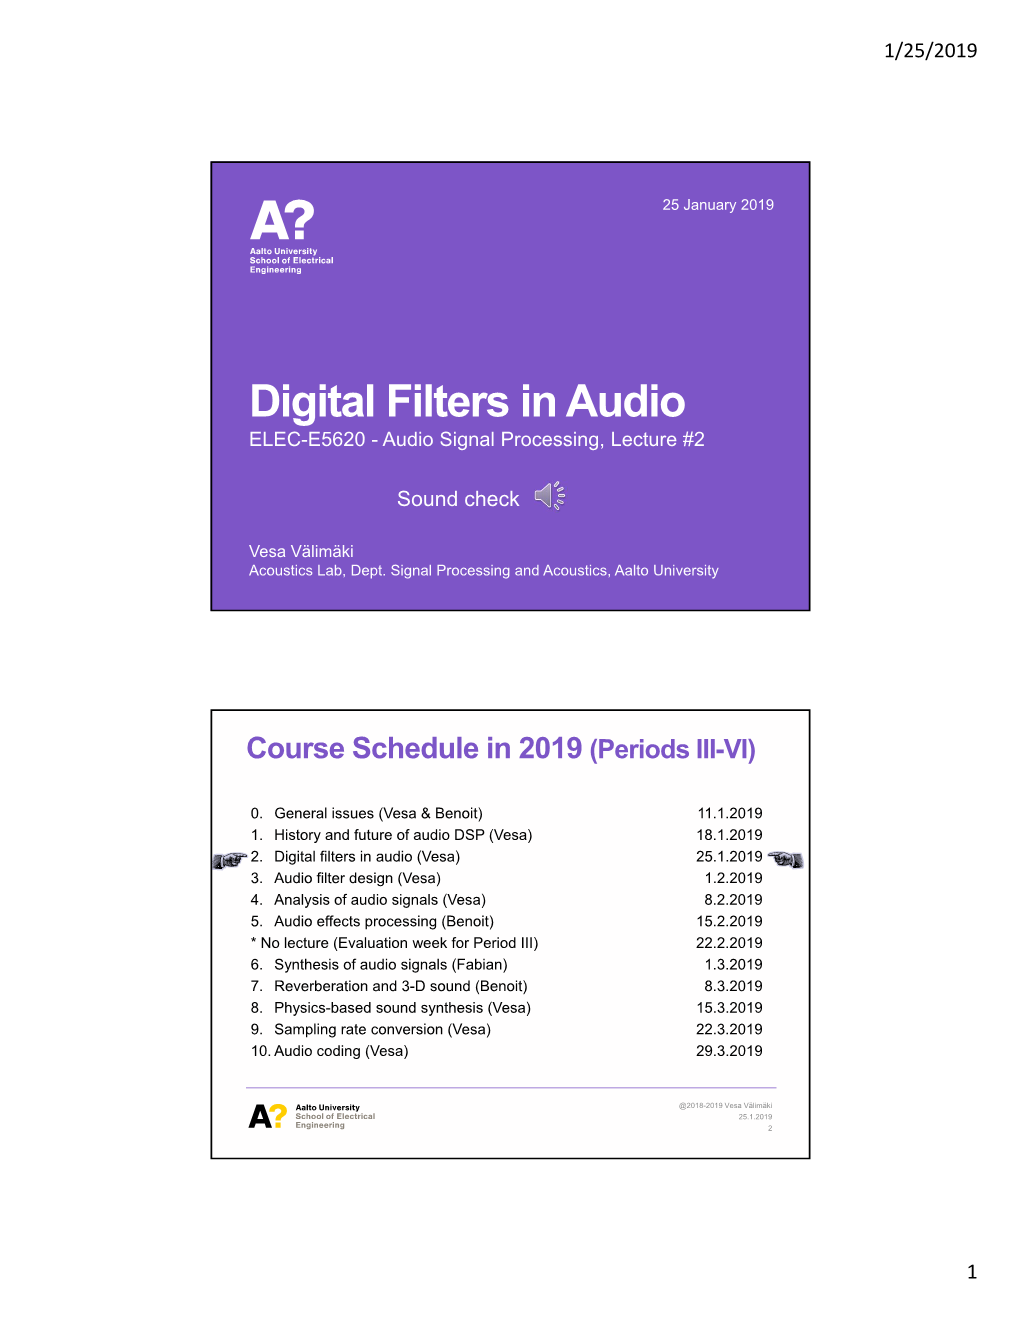 Digital Filters in Audio ELEC-E5620 - Audio Signal Processing, Lecture #2